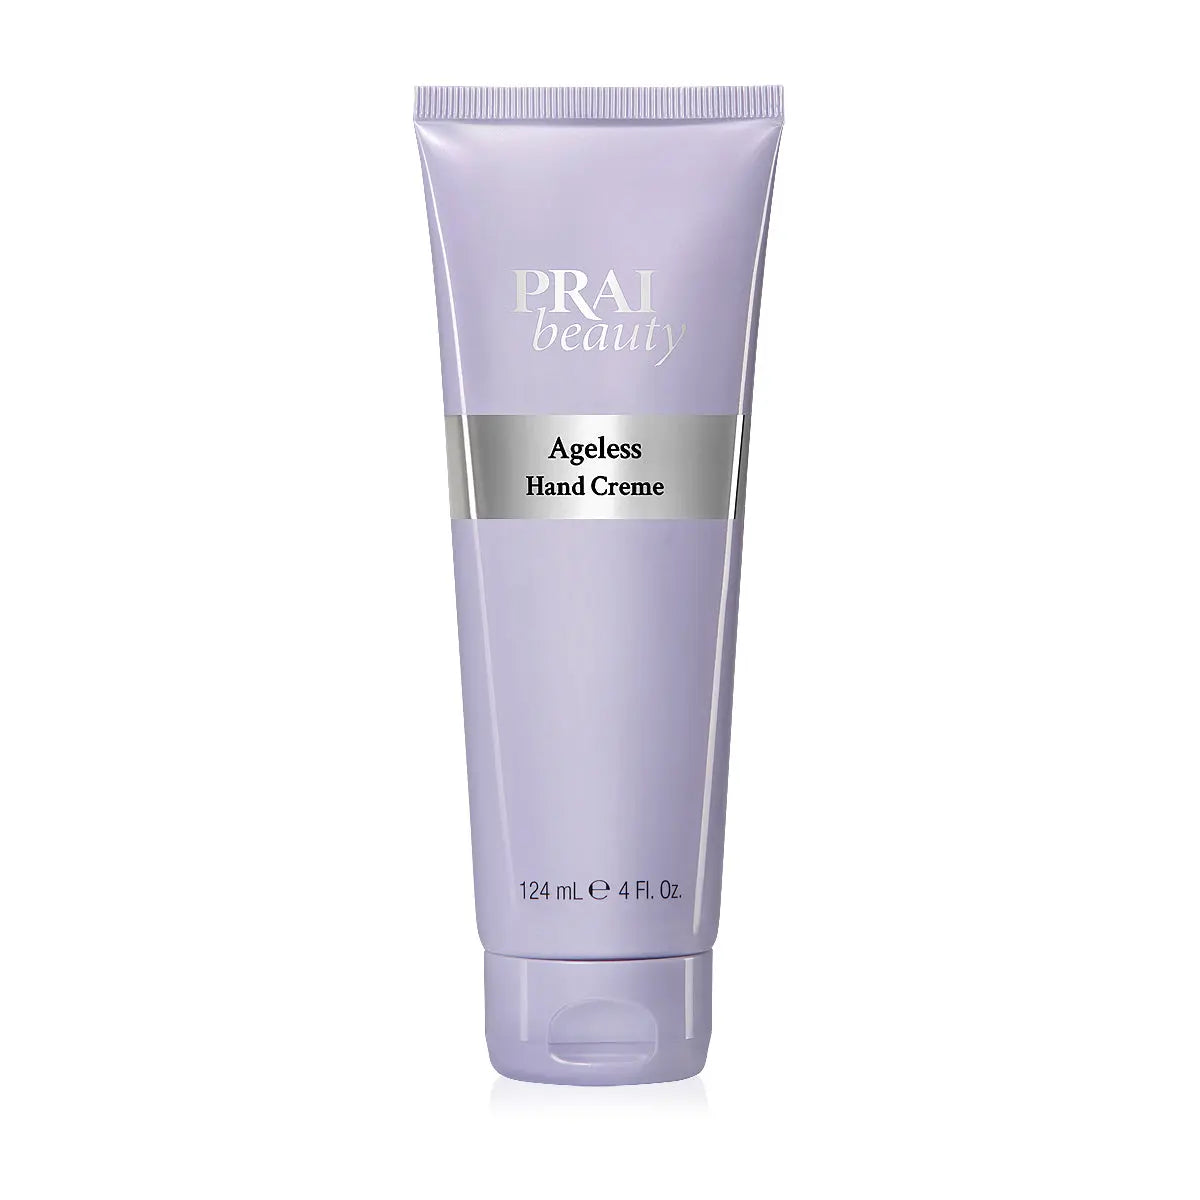 PRAI Beauty AGELESS Hand Creme 124ml % | product_vendor%